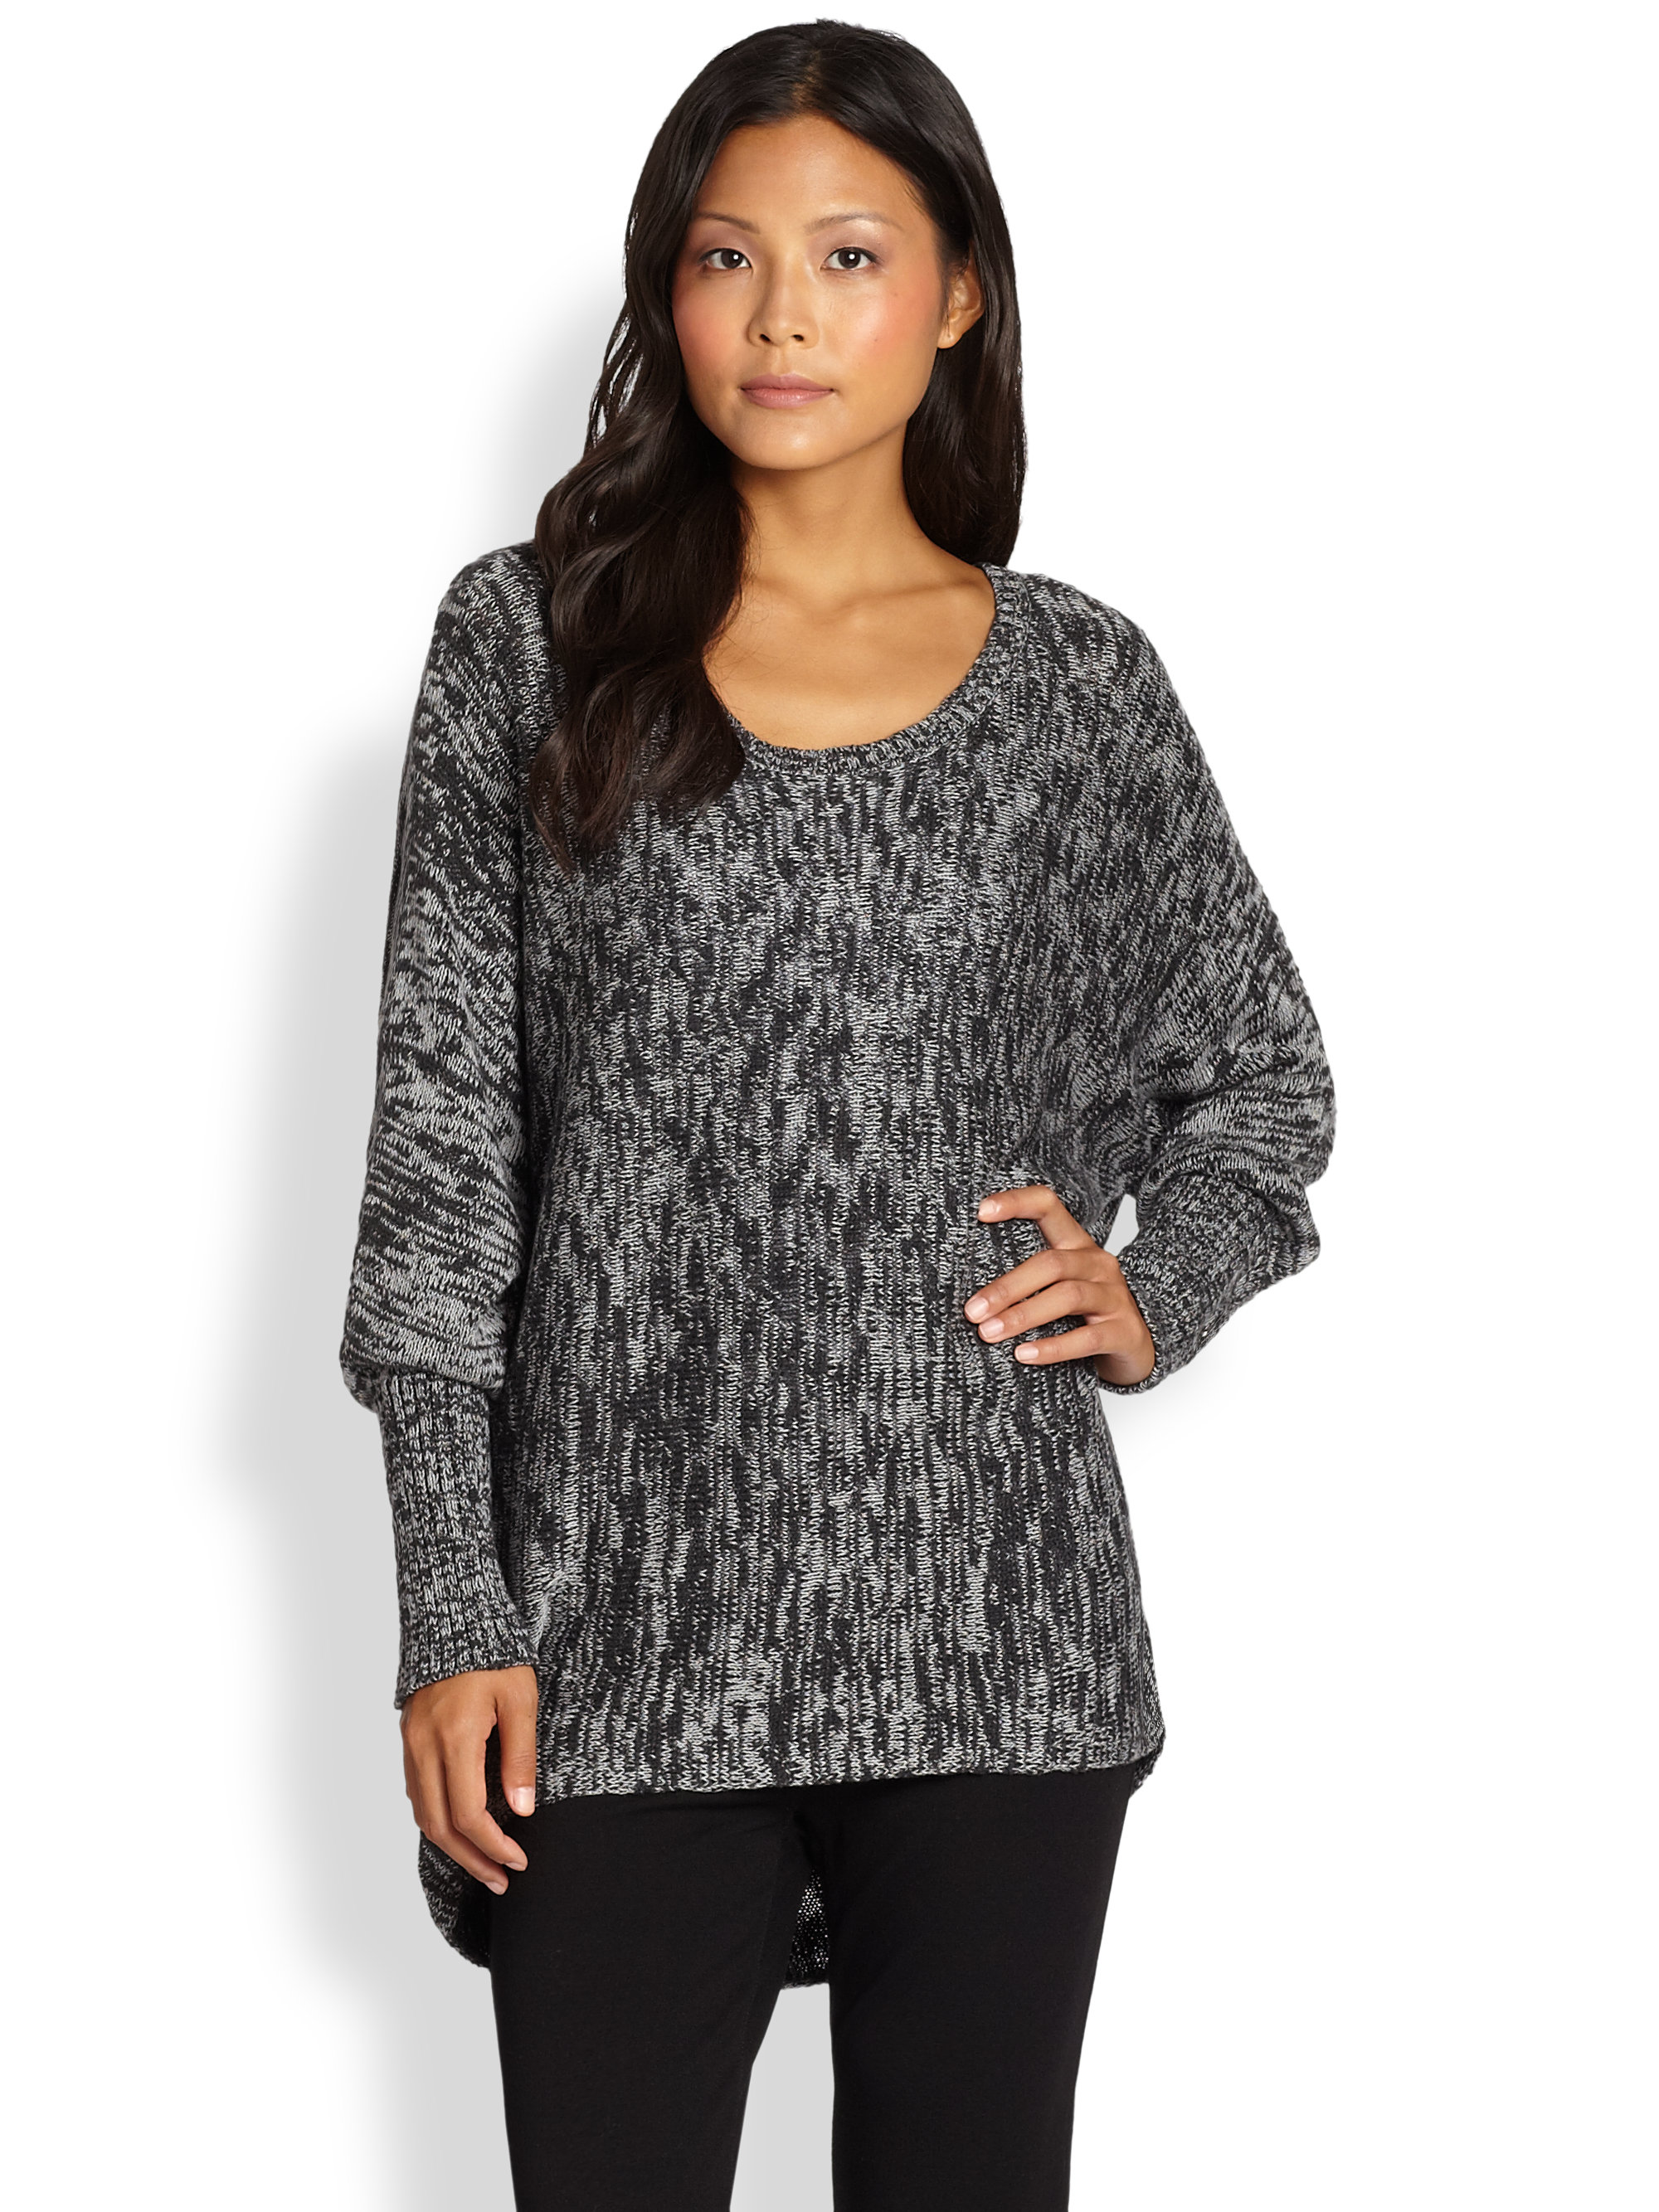 Lyst - Eileen fisher Marled Hilo Dolman Sweater in Gray